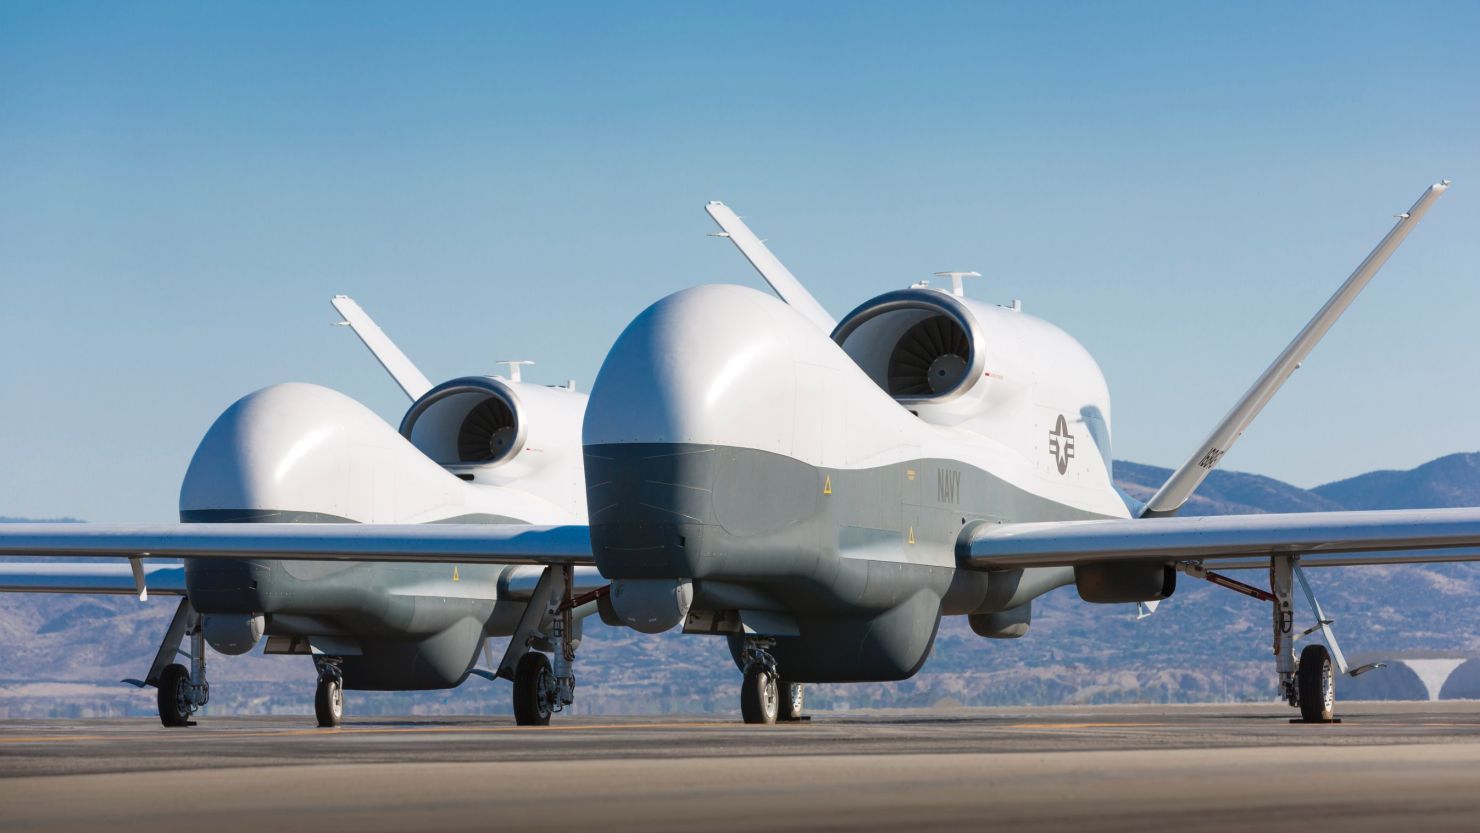 Australia is spending $6.2 billion to acquire six Northrop Grumman MQ-4C Tritons as part of its regional surveillance operations.